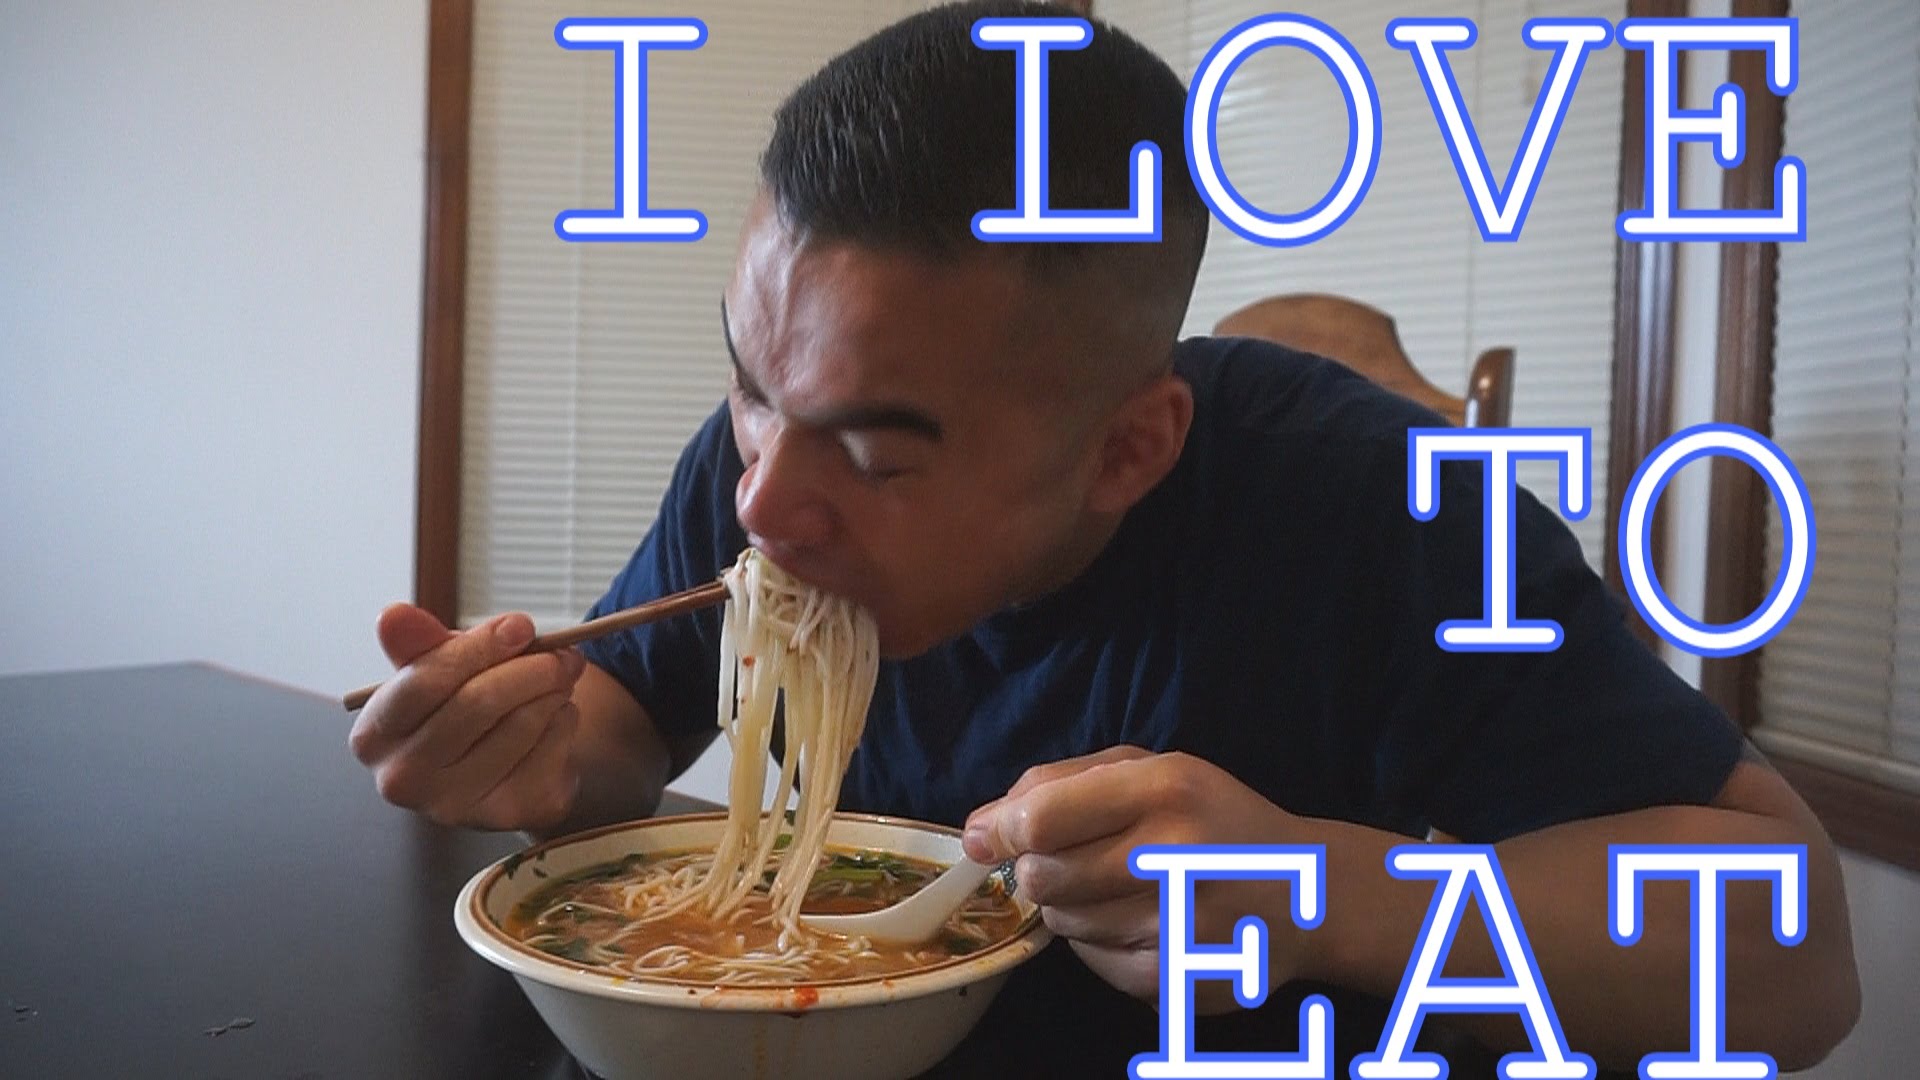 QT| MY LIFE| I LOVE TO EAT - YouTube